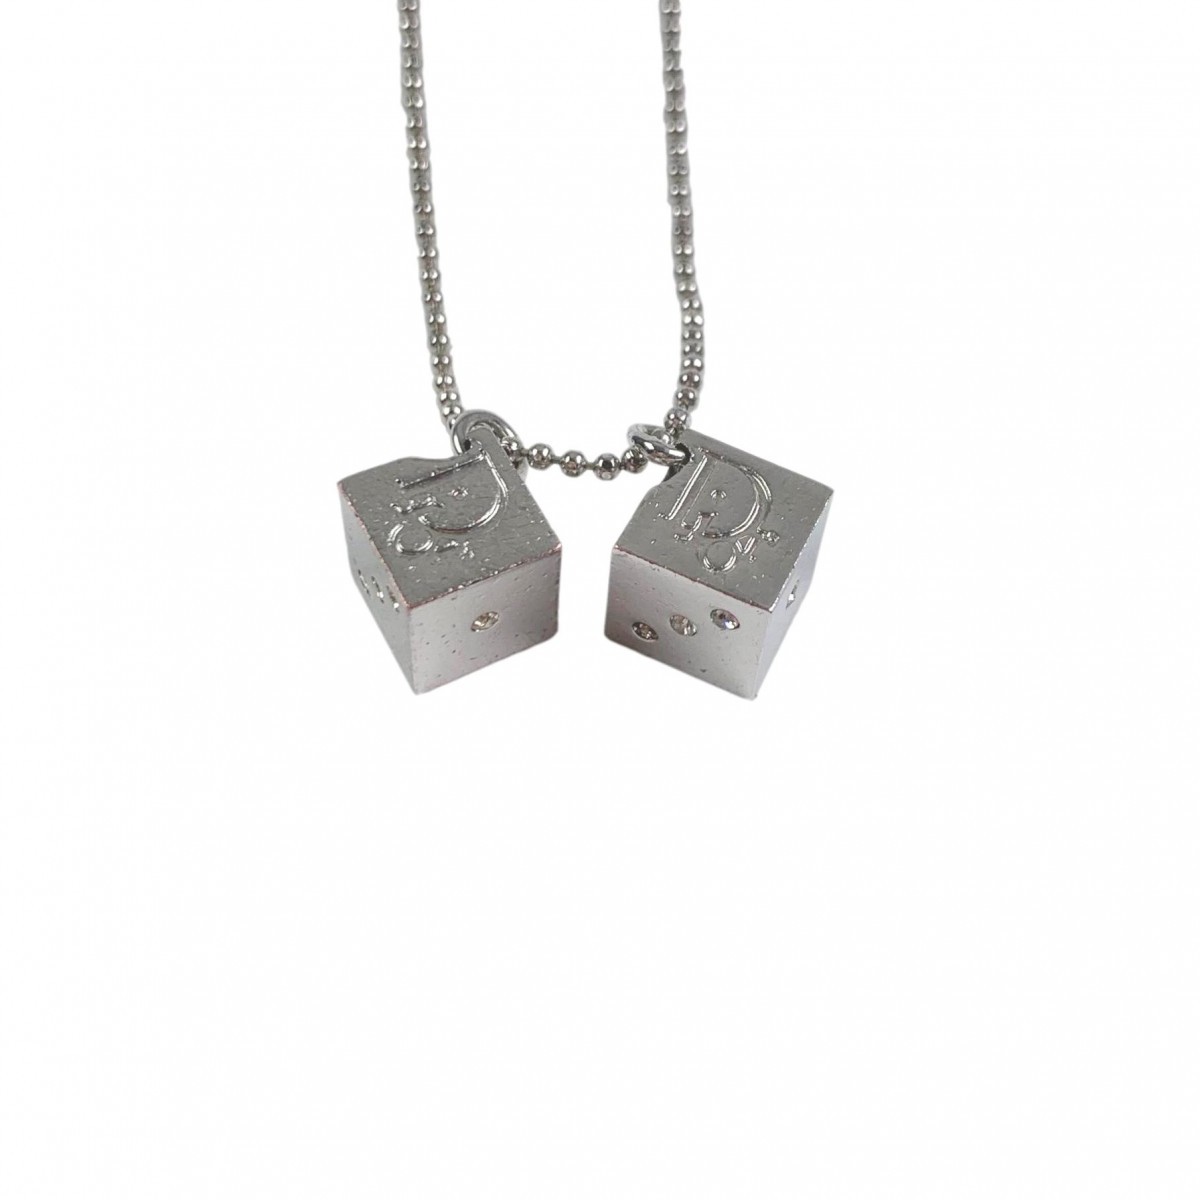 Silver Dice necklace - 1